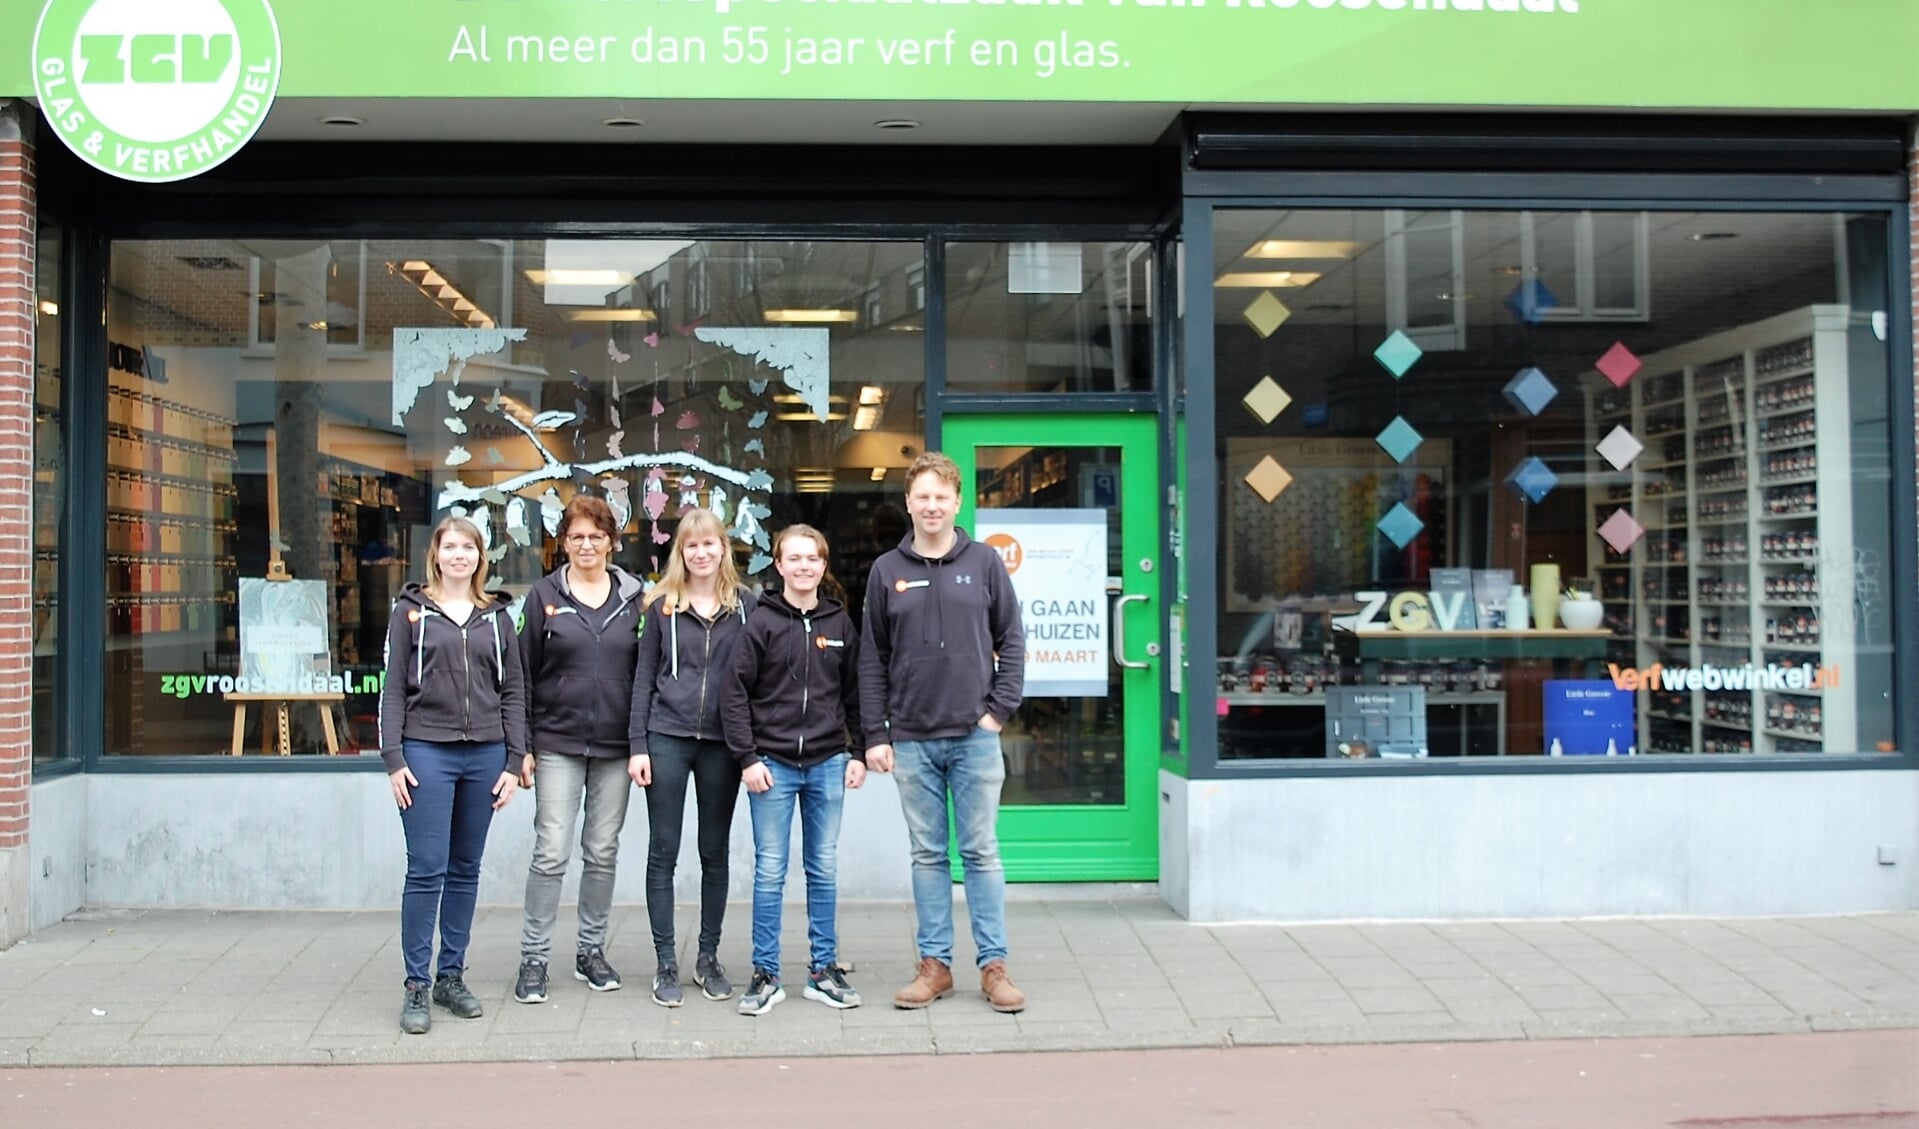 Lotte, Bernadette, Ole, Kristian en Rina ontvangen u vanaf 11 maart a.s. graag in de nieuwe winkel. FOTO ELLES JANSEN